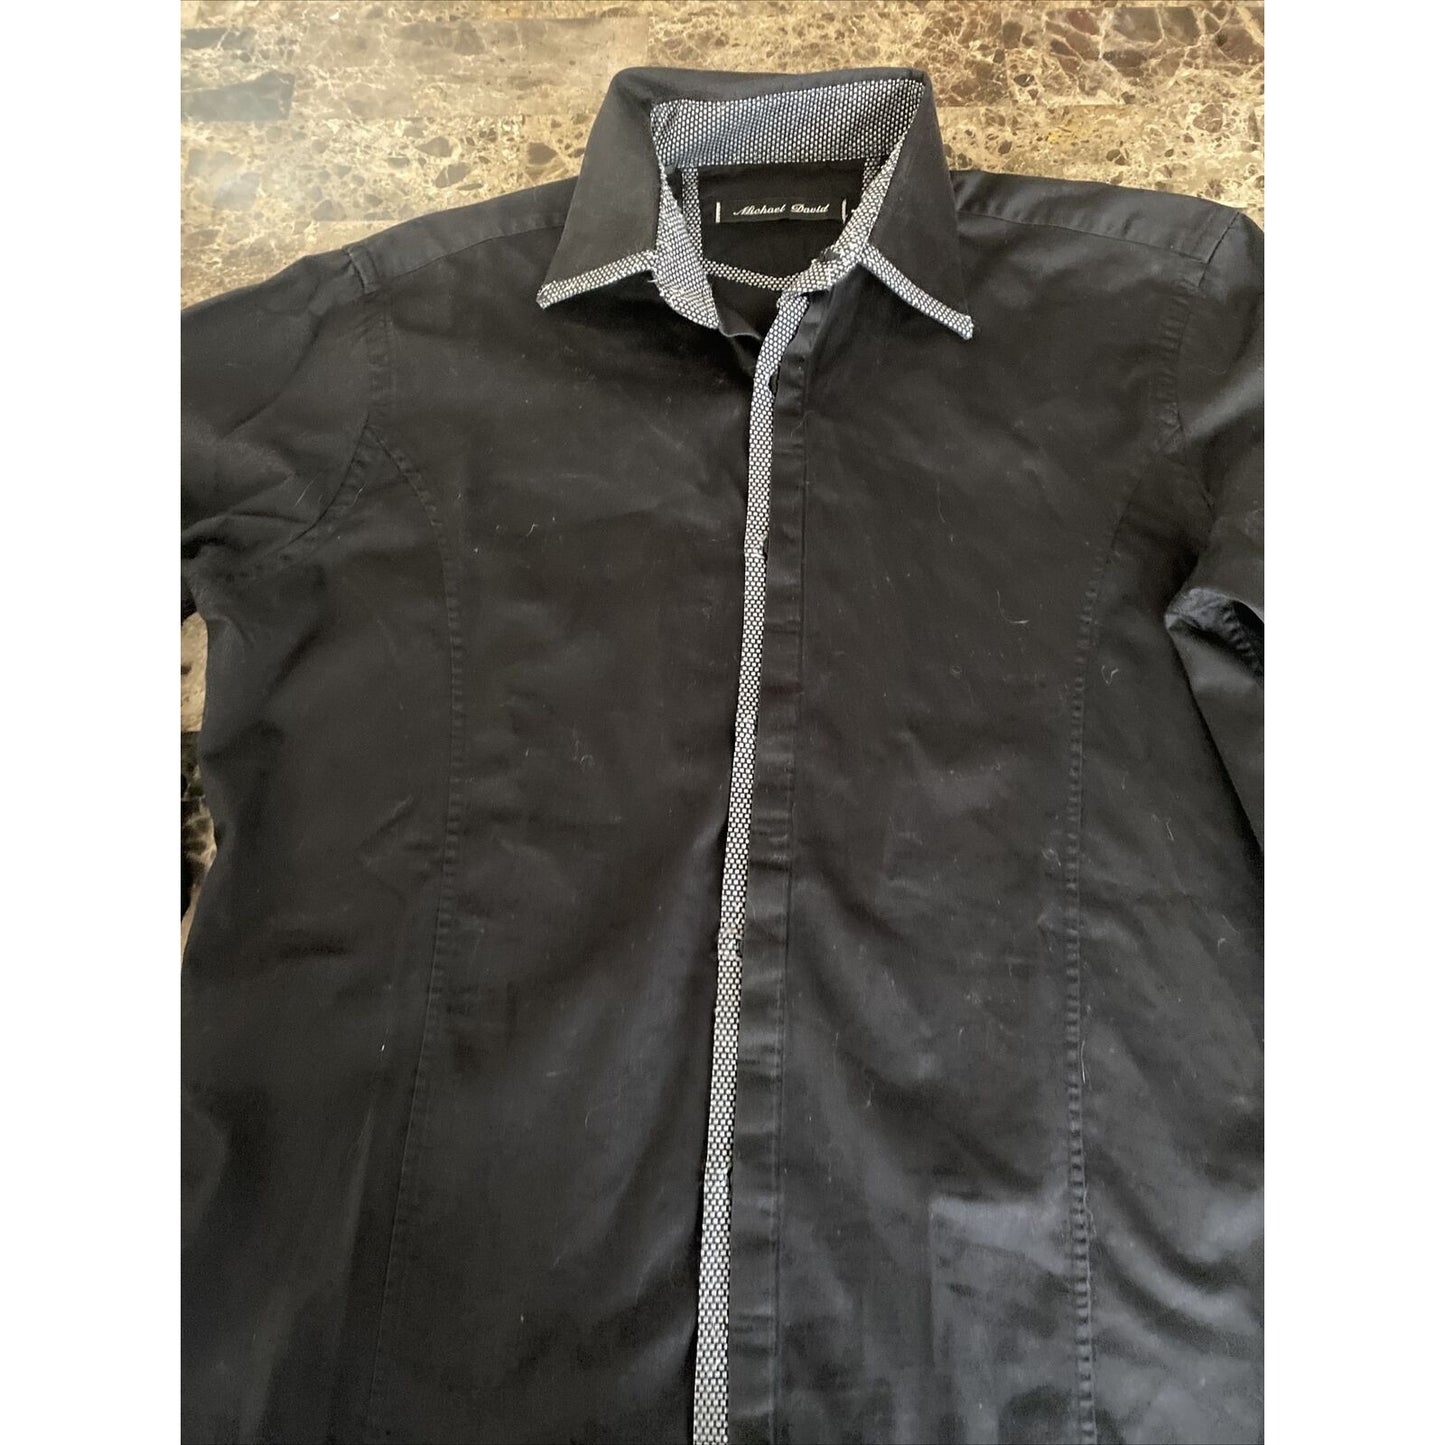 Michael David Men’s Medium Black Button-down Long Sleeves Shirt